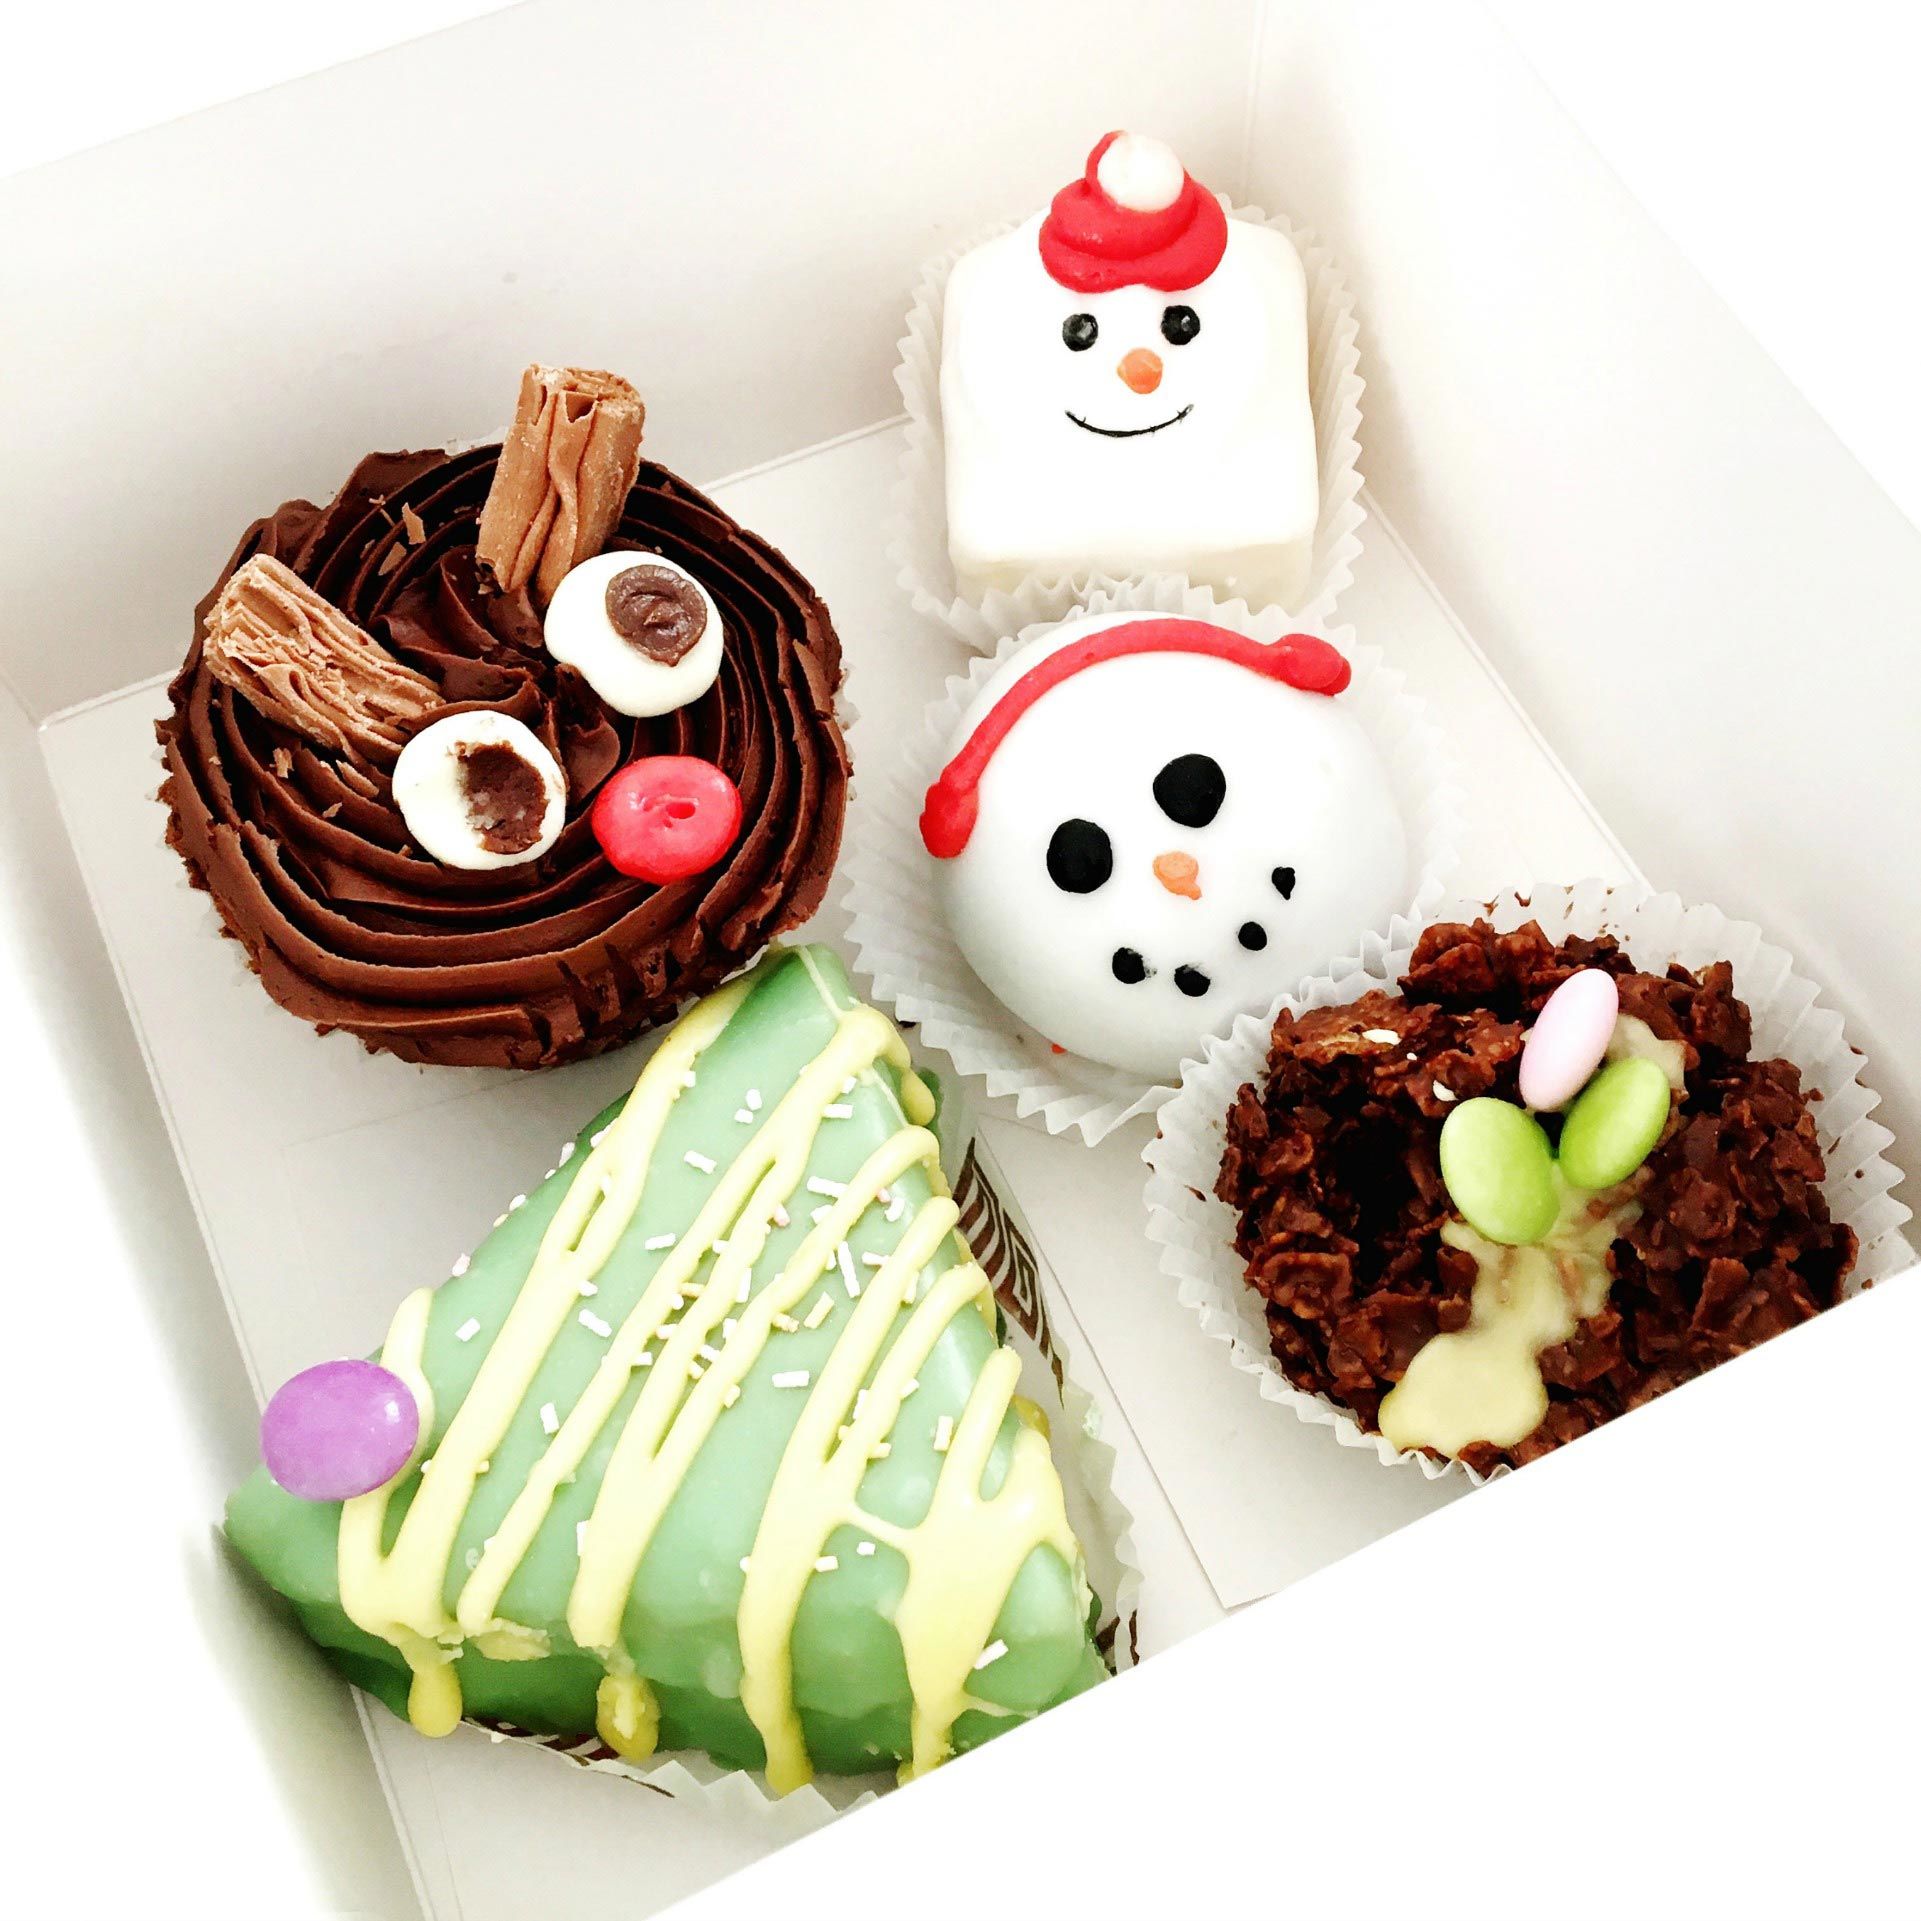 Christmas themed cakes